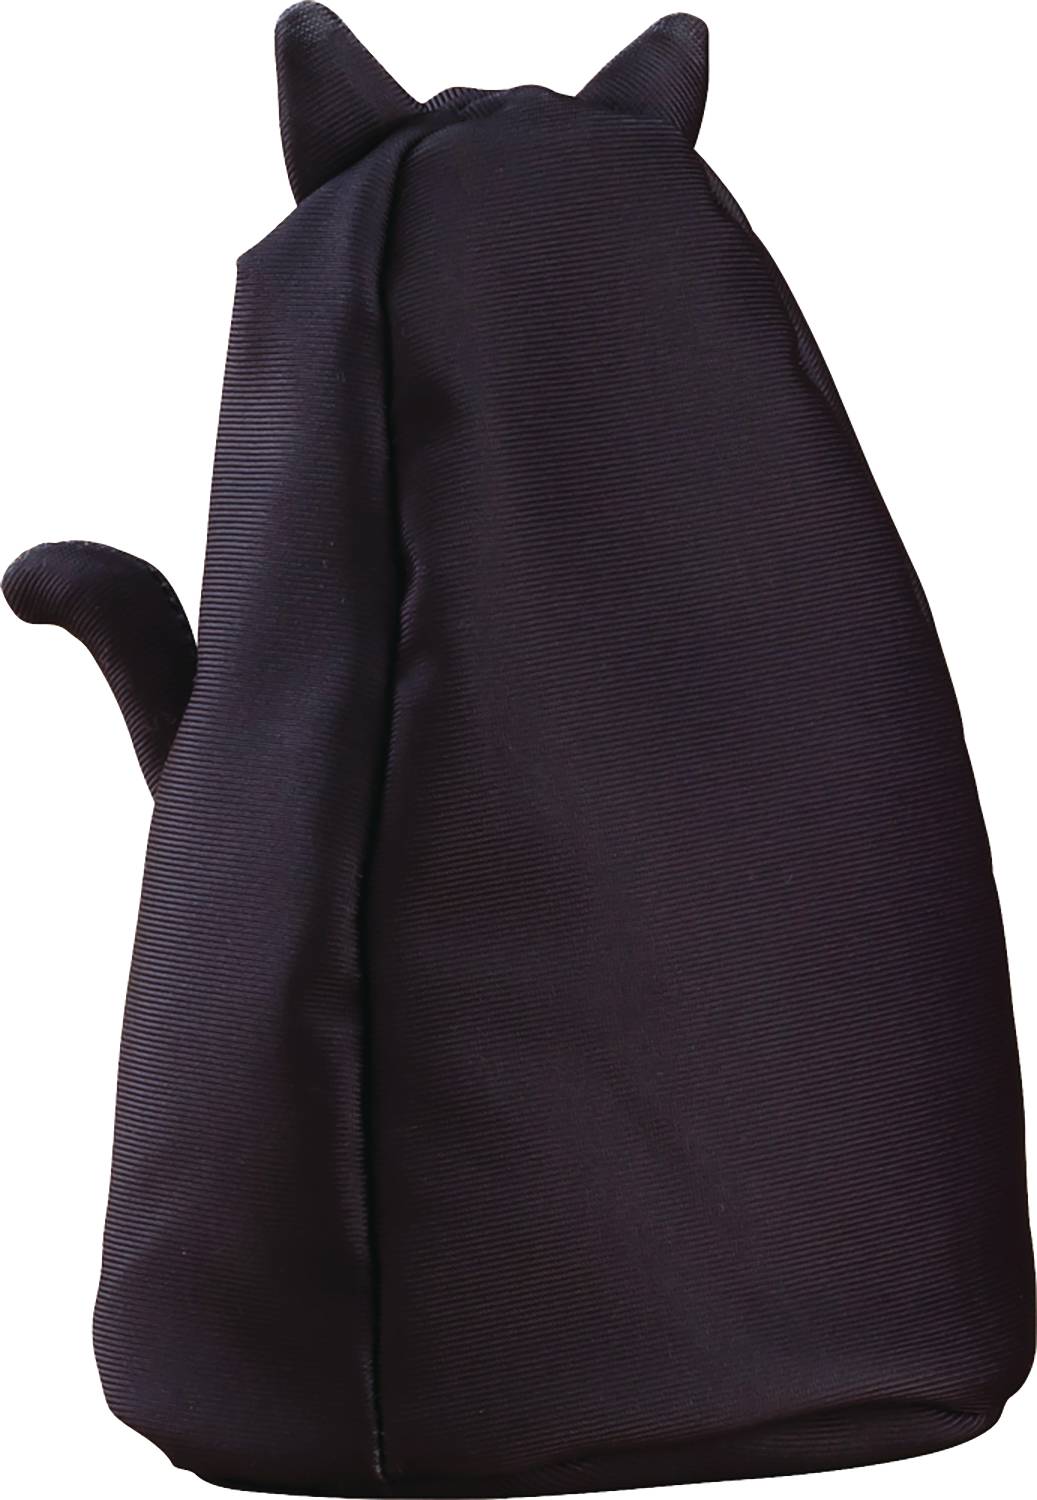 Good Smile Company Nendoroid More Bean Bag Chair : Black Cat